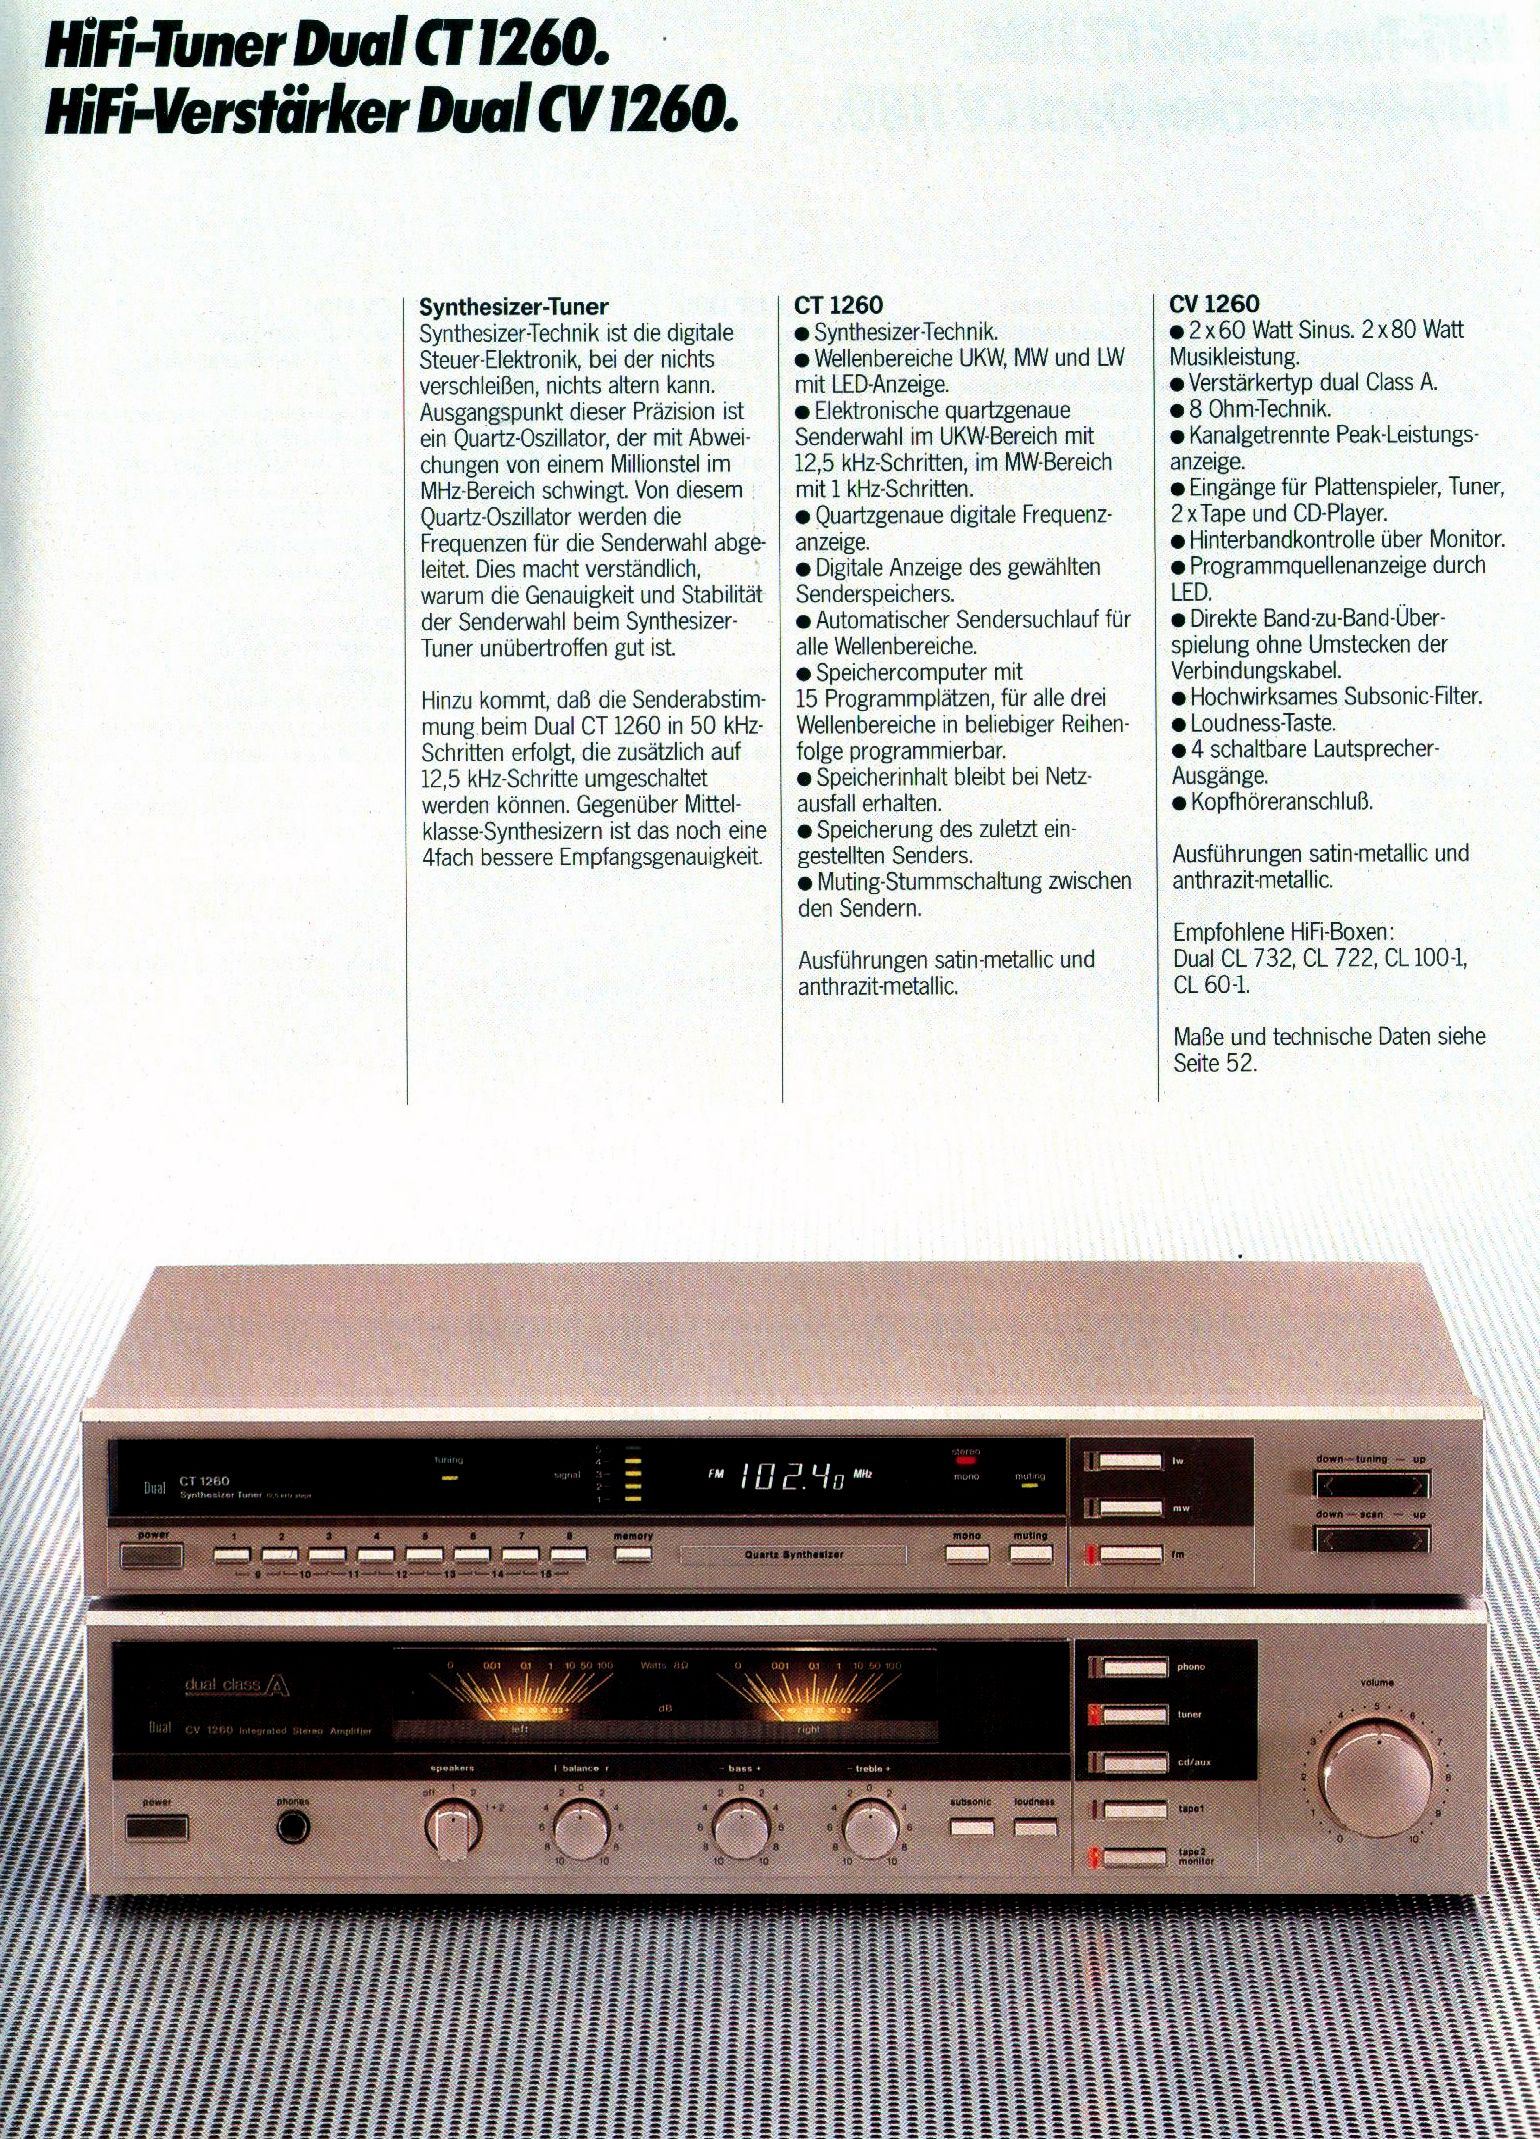 Dual CT-CV-1260-Prospekt-1985.jpg